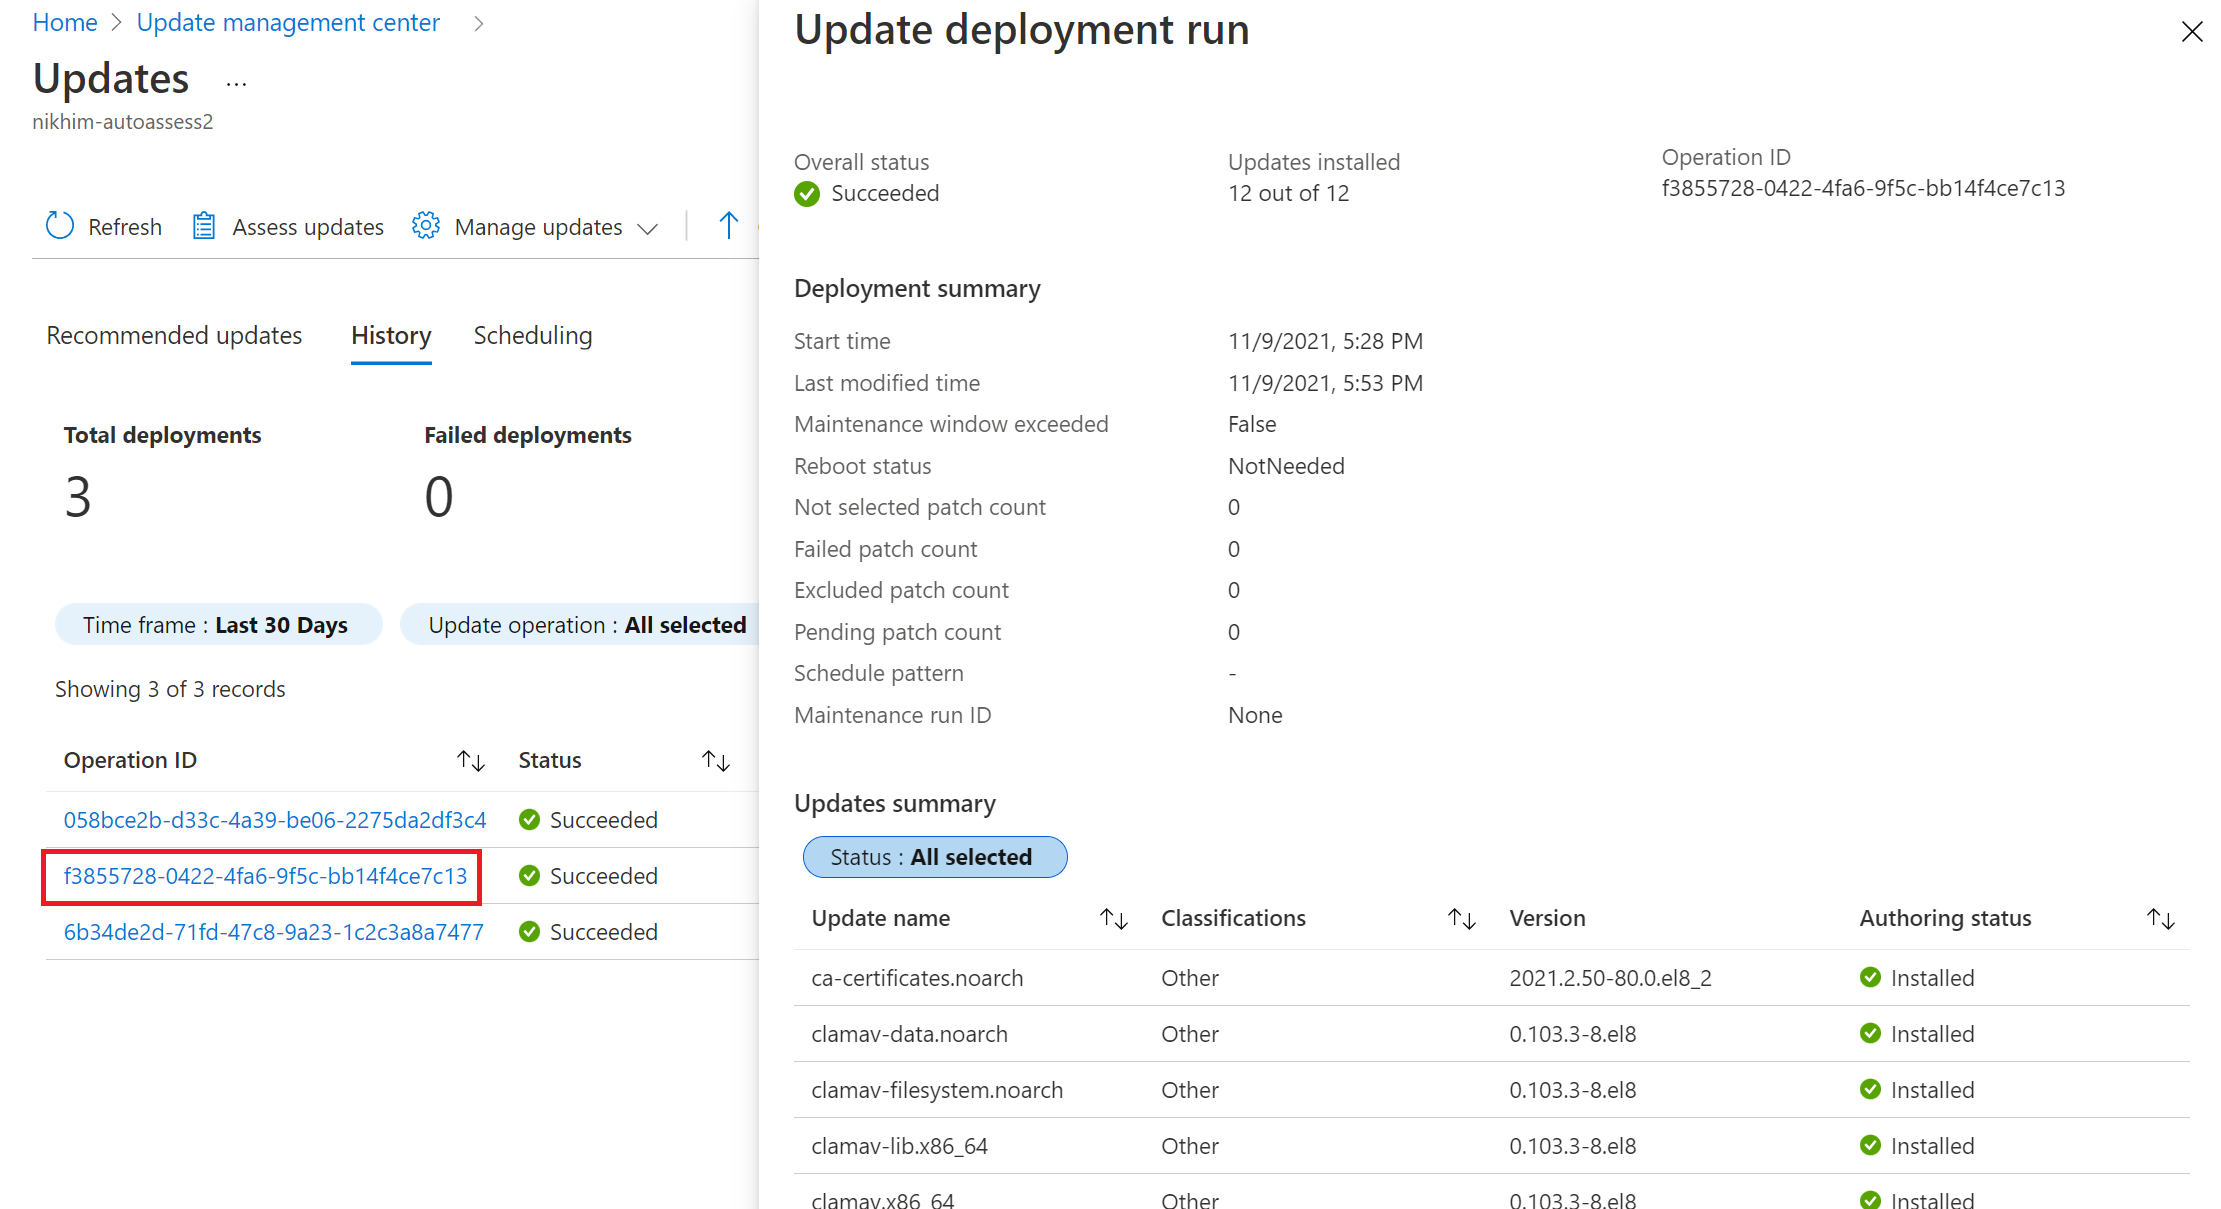 Example showing update deployment run.